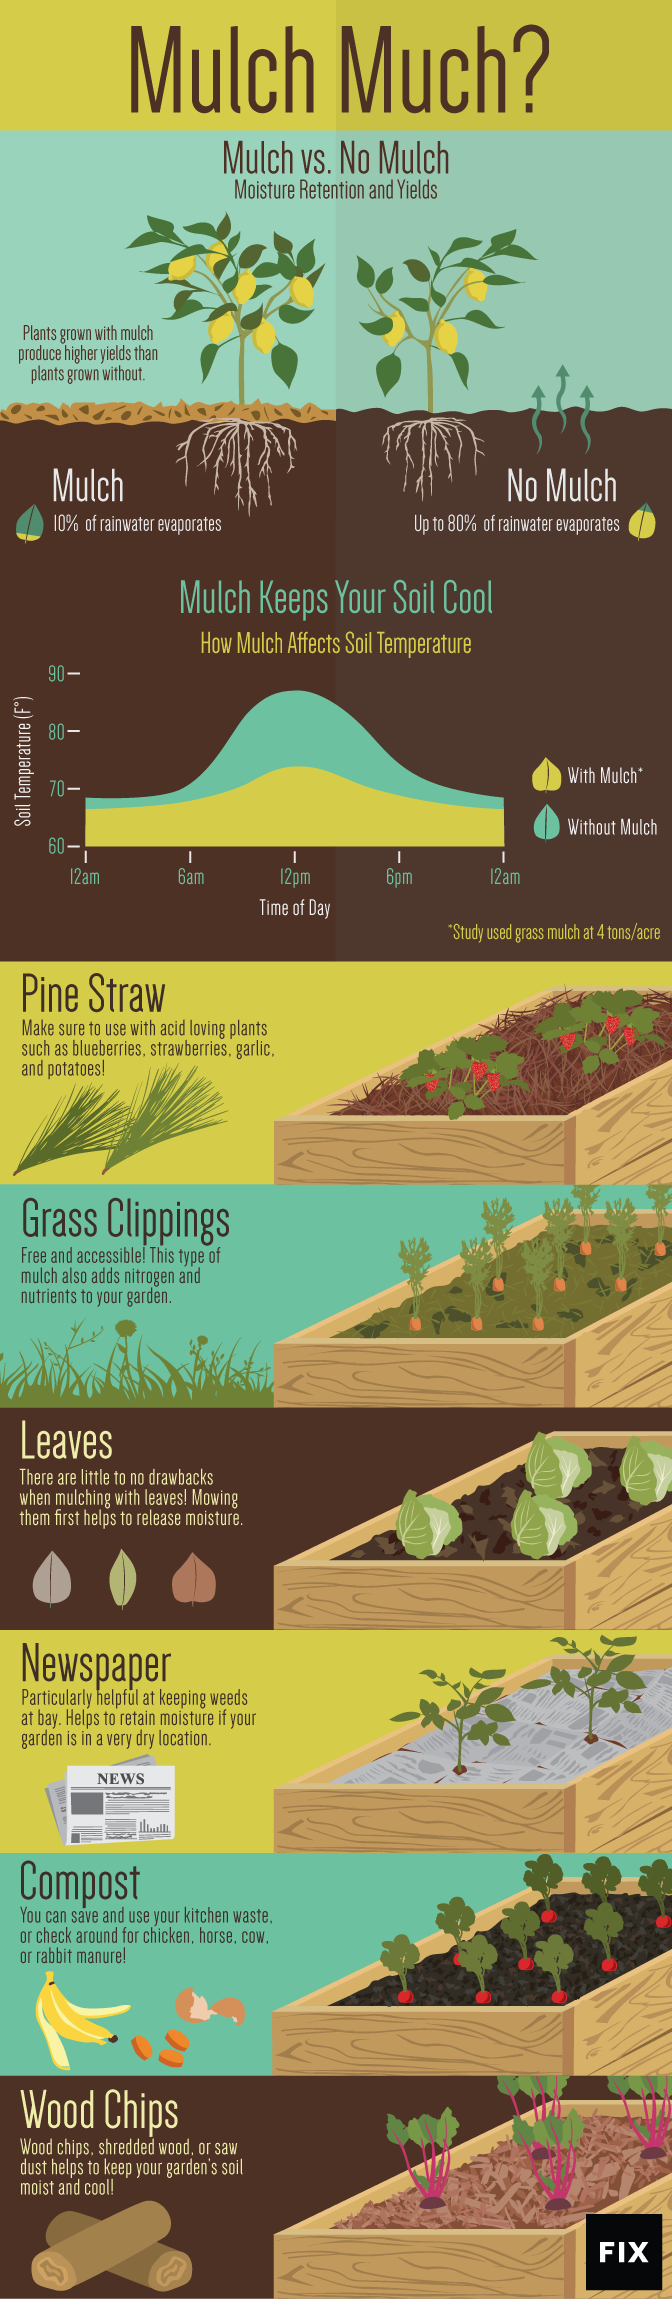 organic mulch and tips